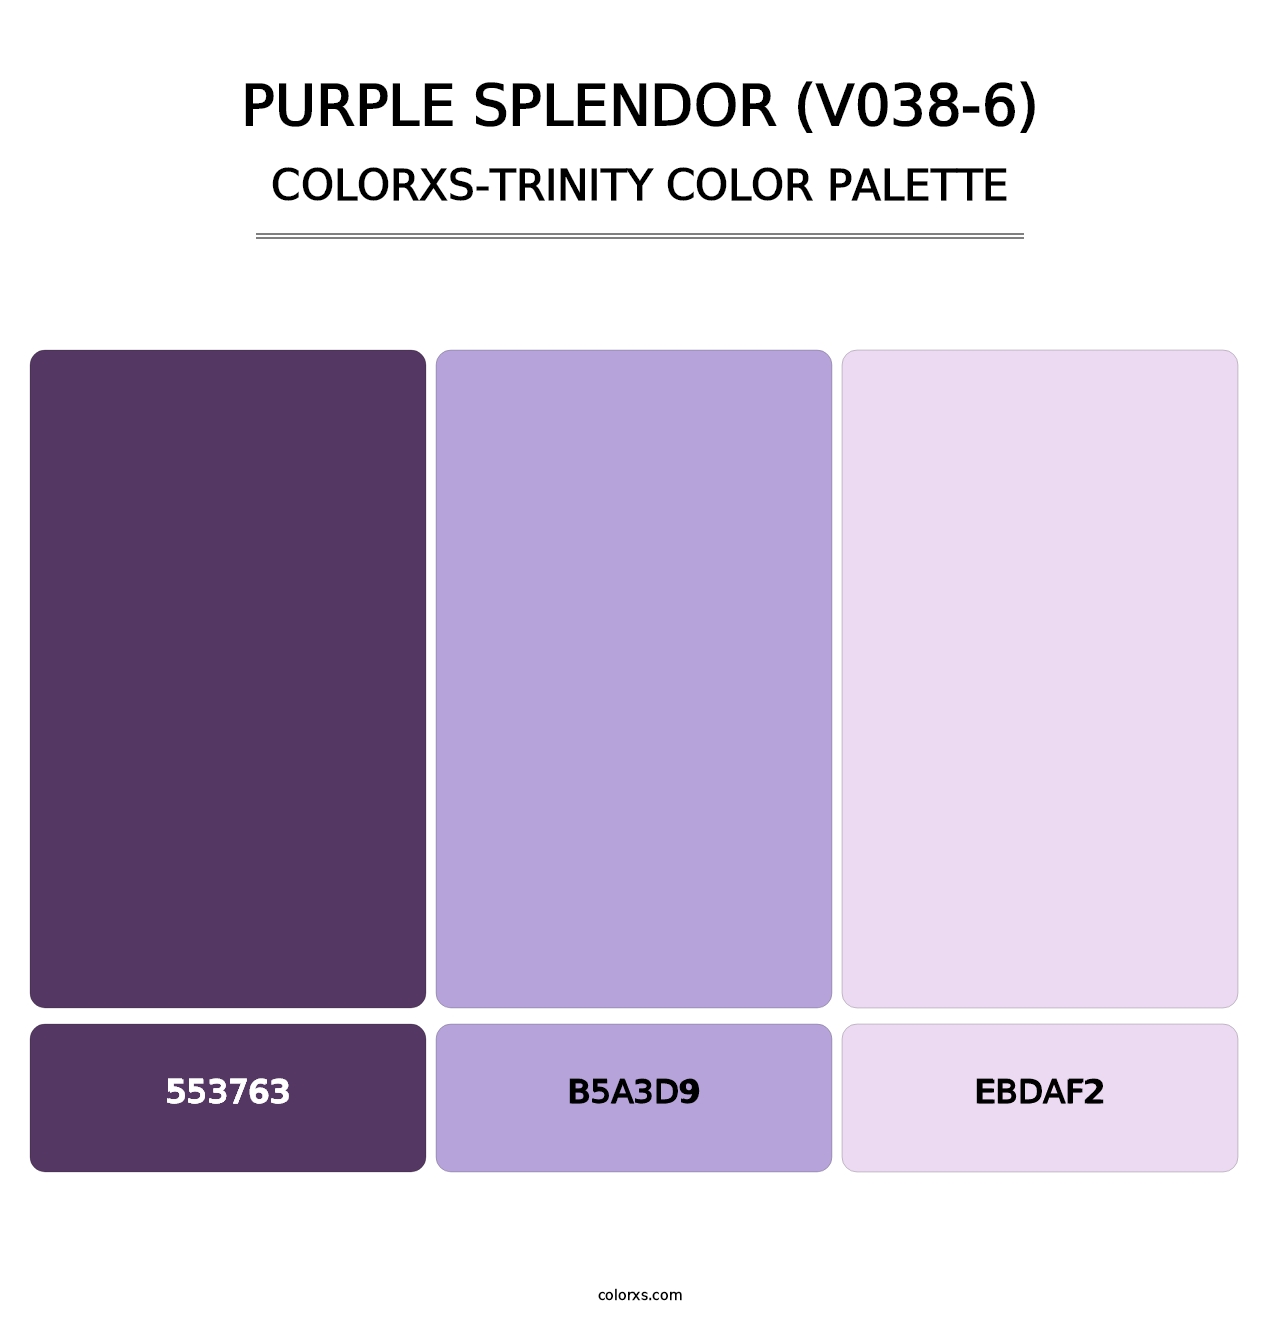 Purple Splendor (V038-6) - Colorxs Trinity Palette